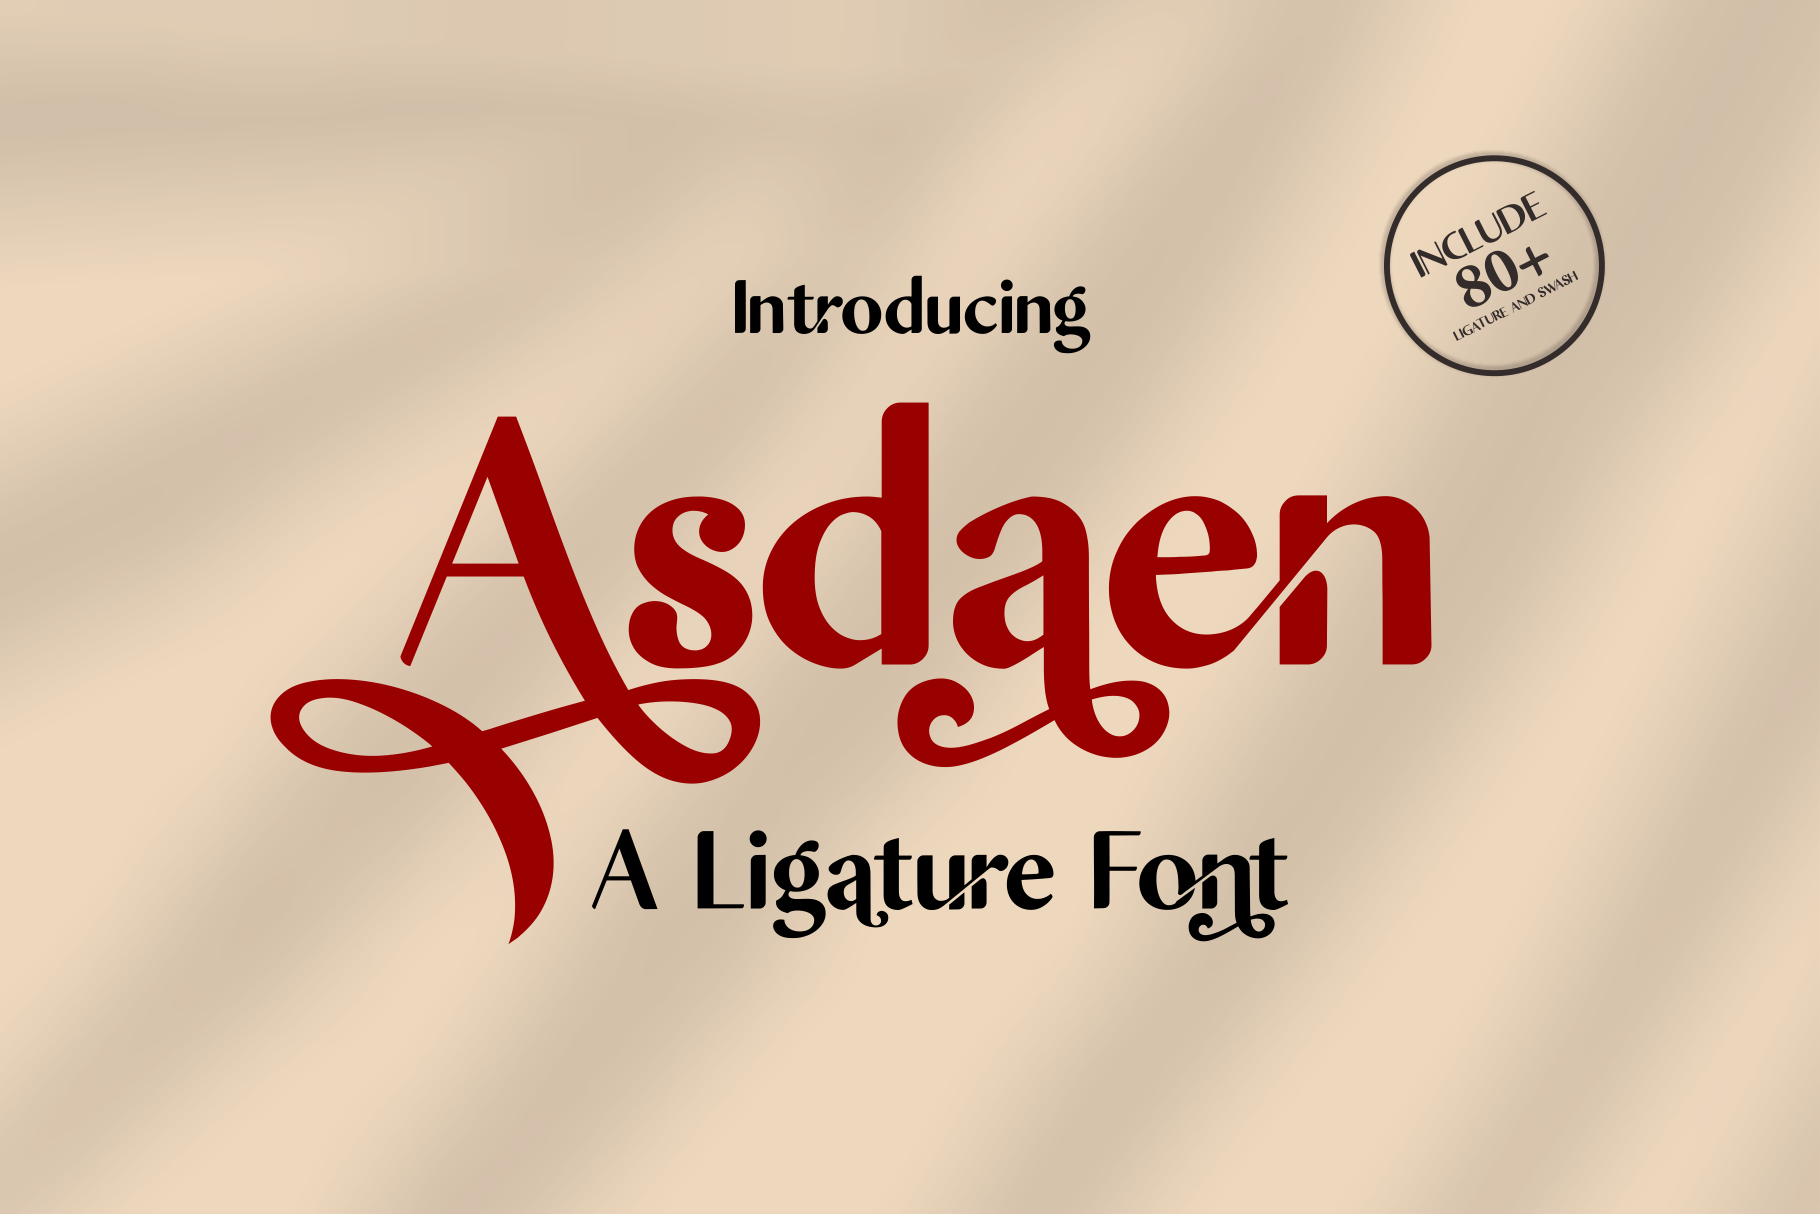 Asdaen, a ligature font